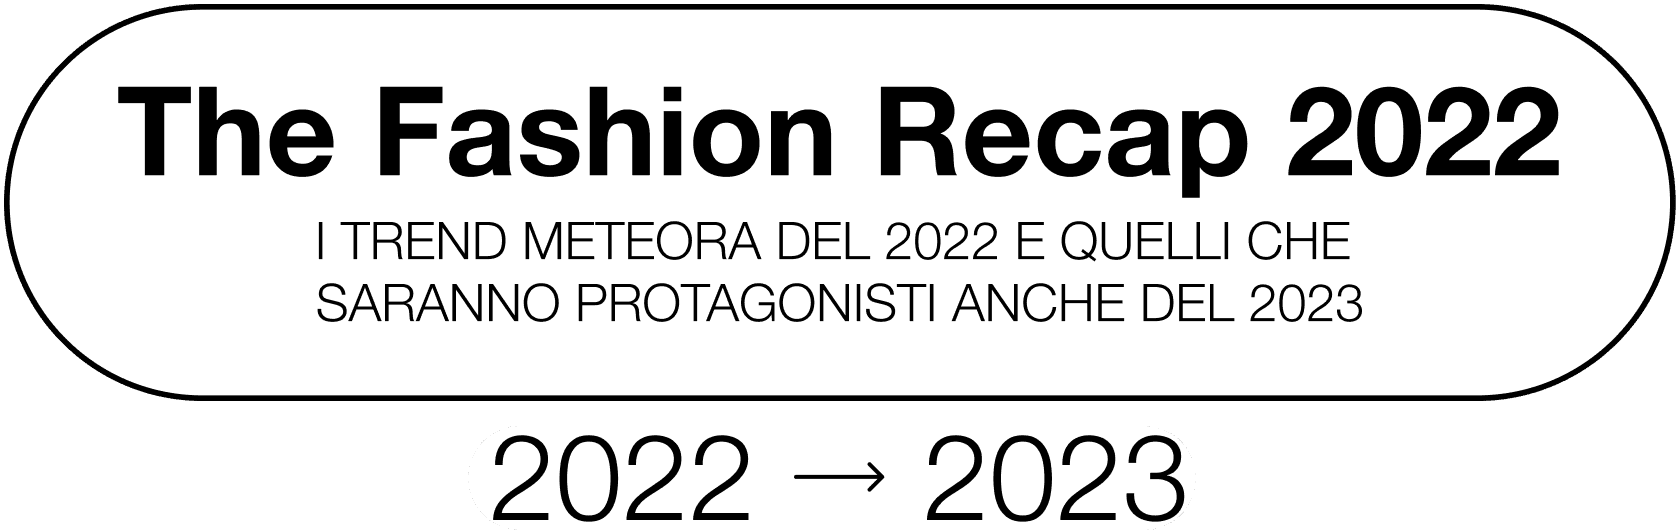 2022-Fashion Recap-Stylight-IT-Title-Banner